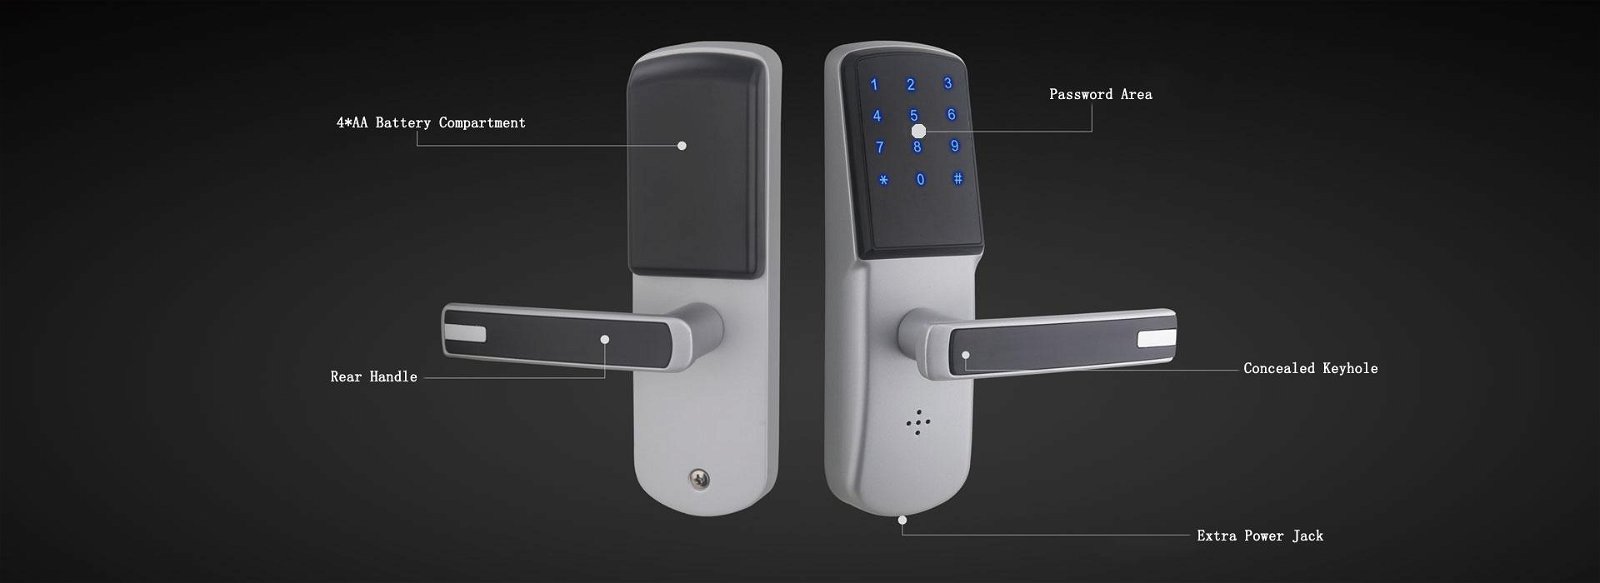 remote control zwave hotel smart door lock APP PIN code Key unlock 2